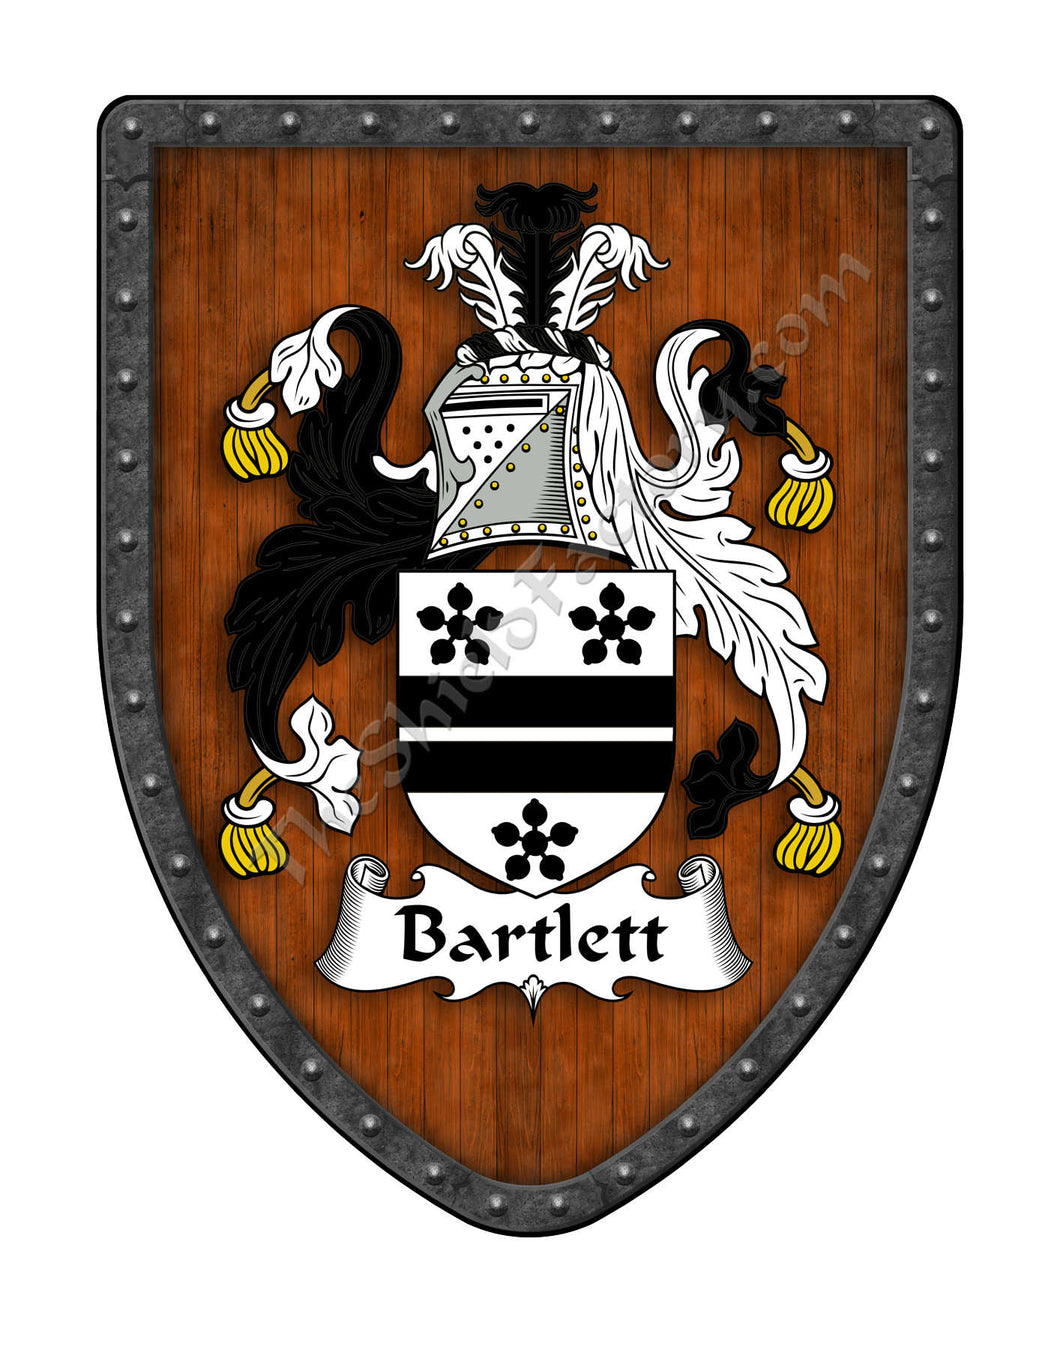 Bartlett Family Crest Coat of Arms